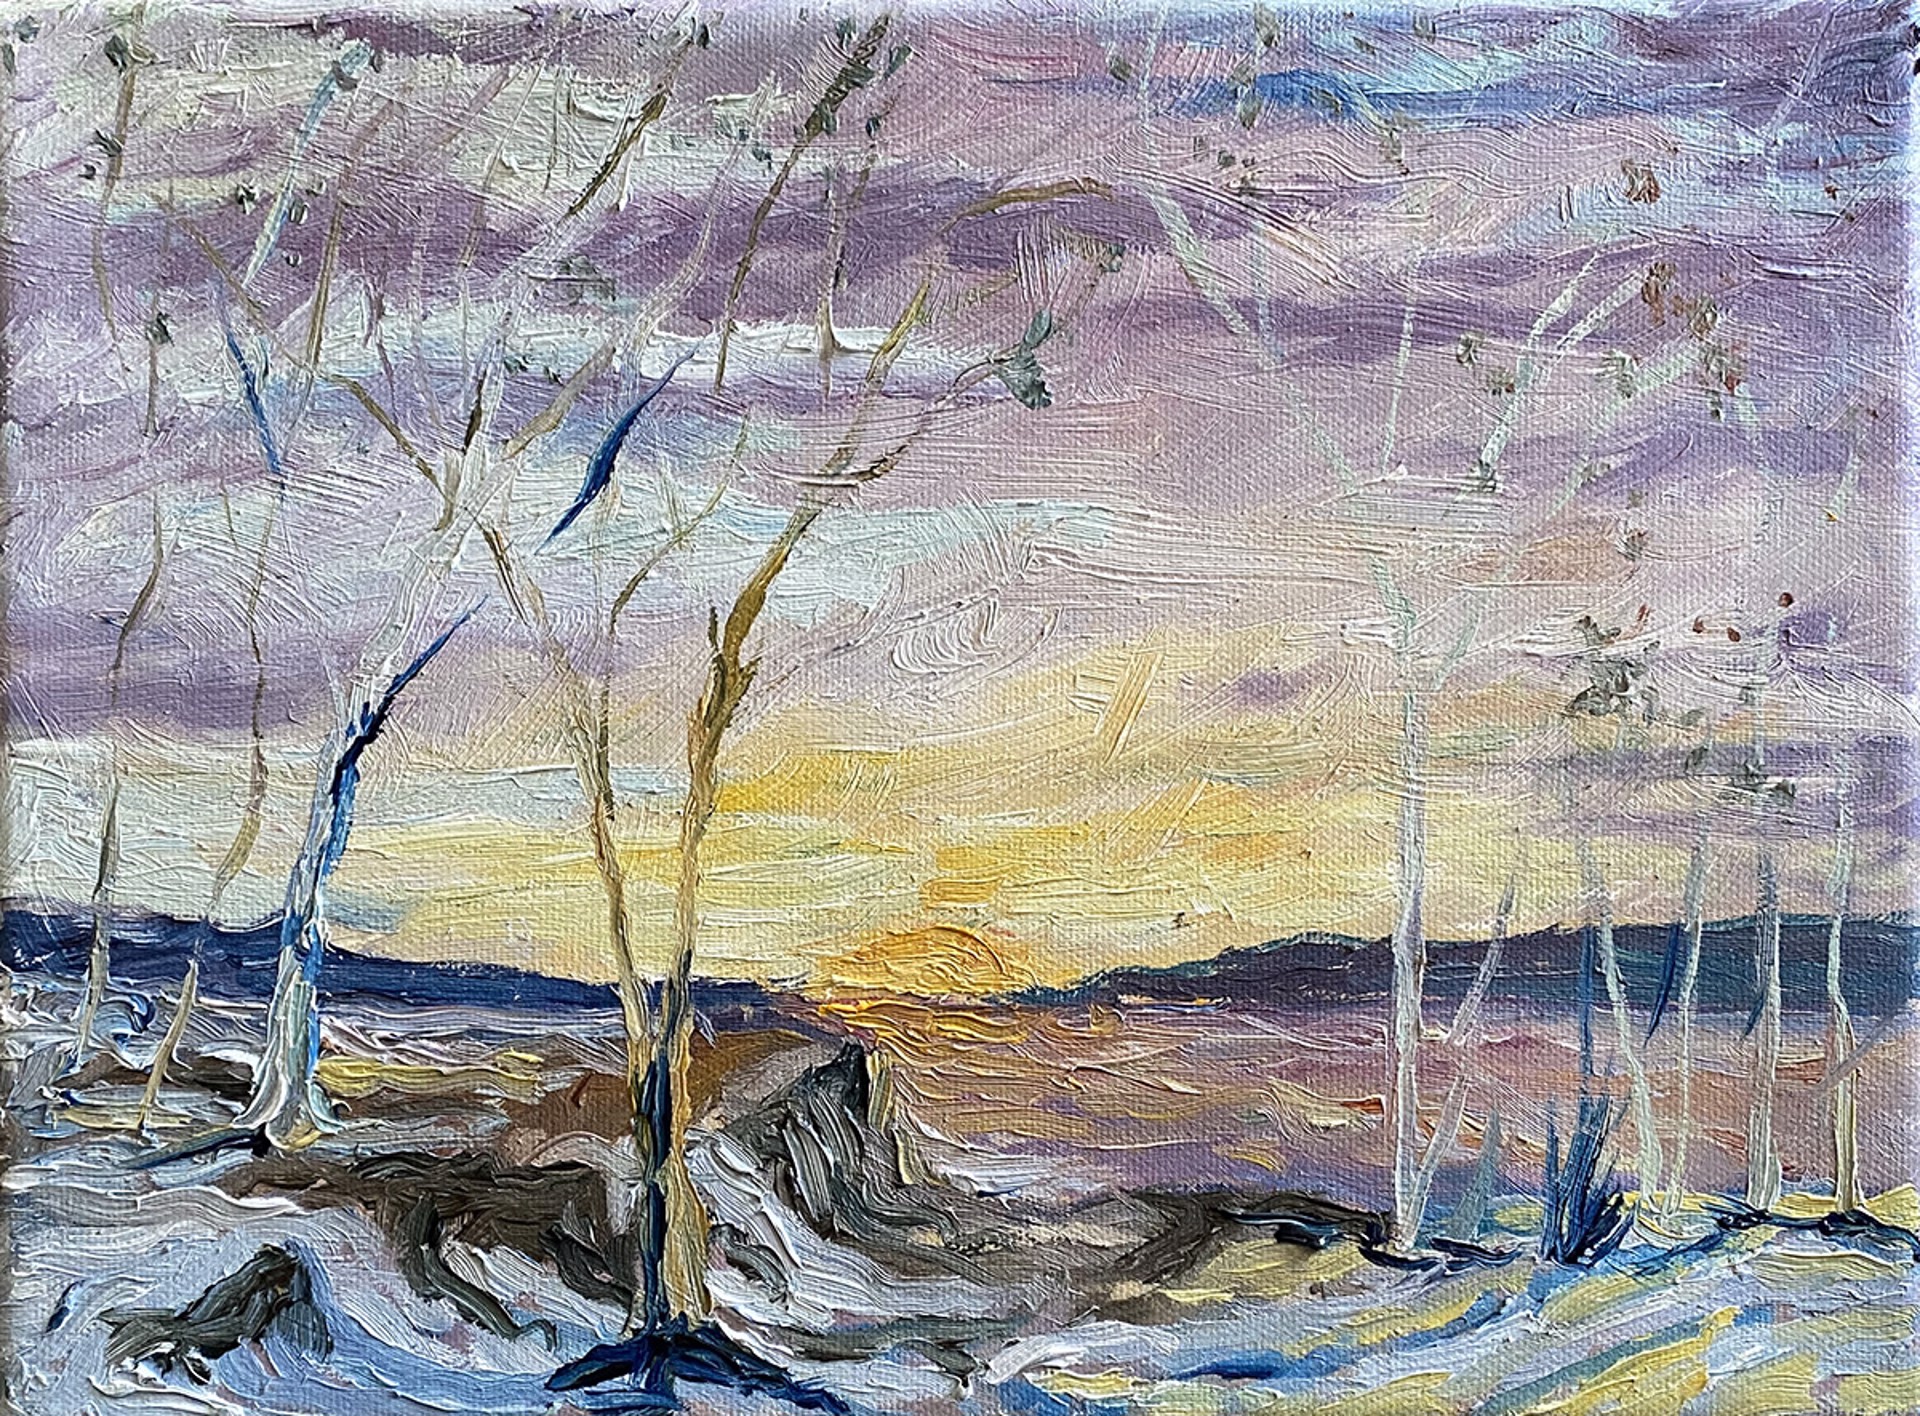 Winter Sunset by Wayne Medford